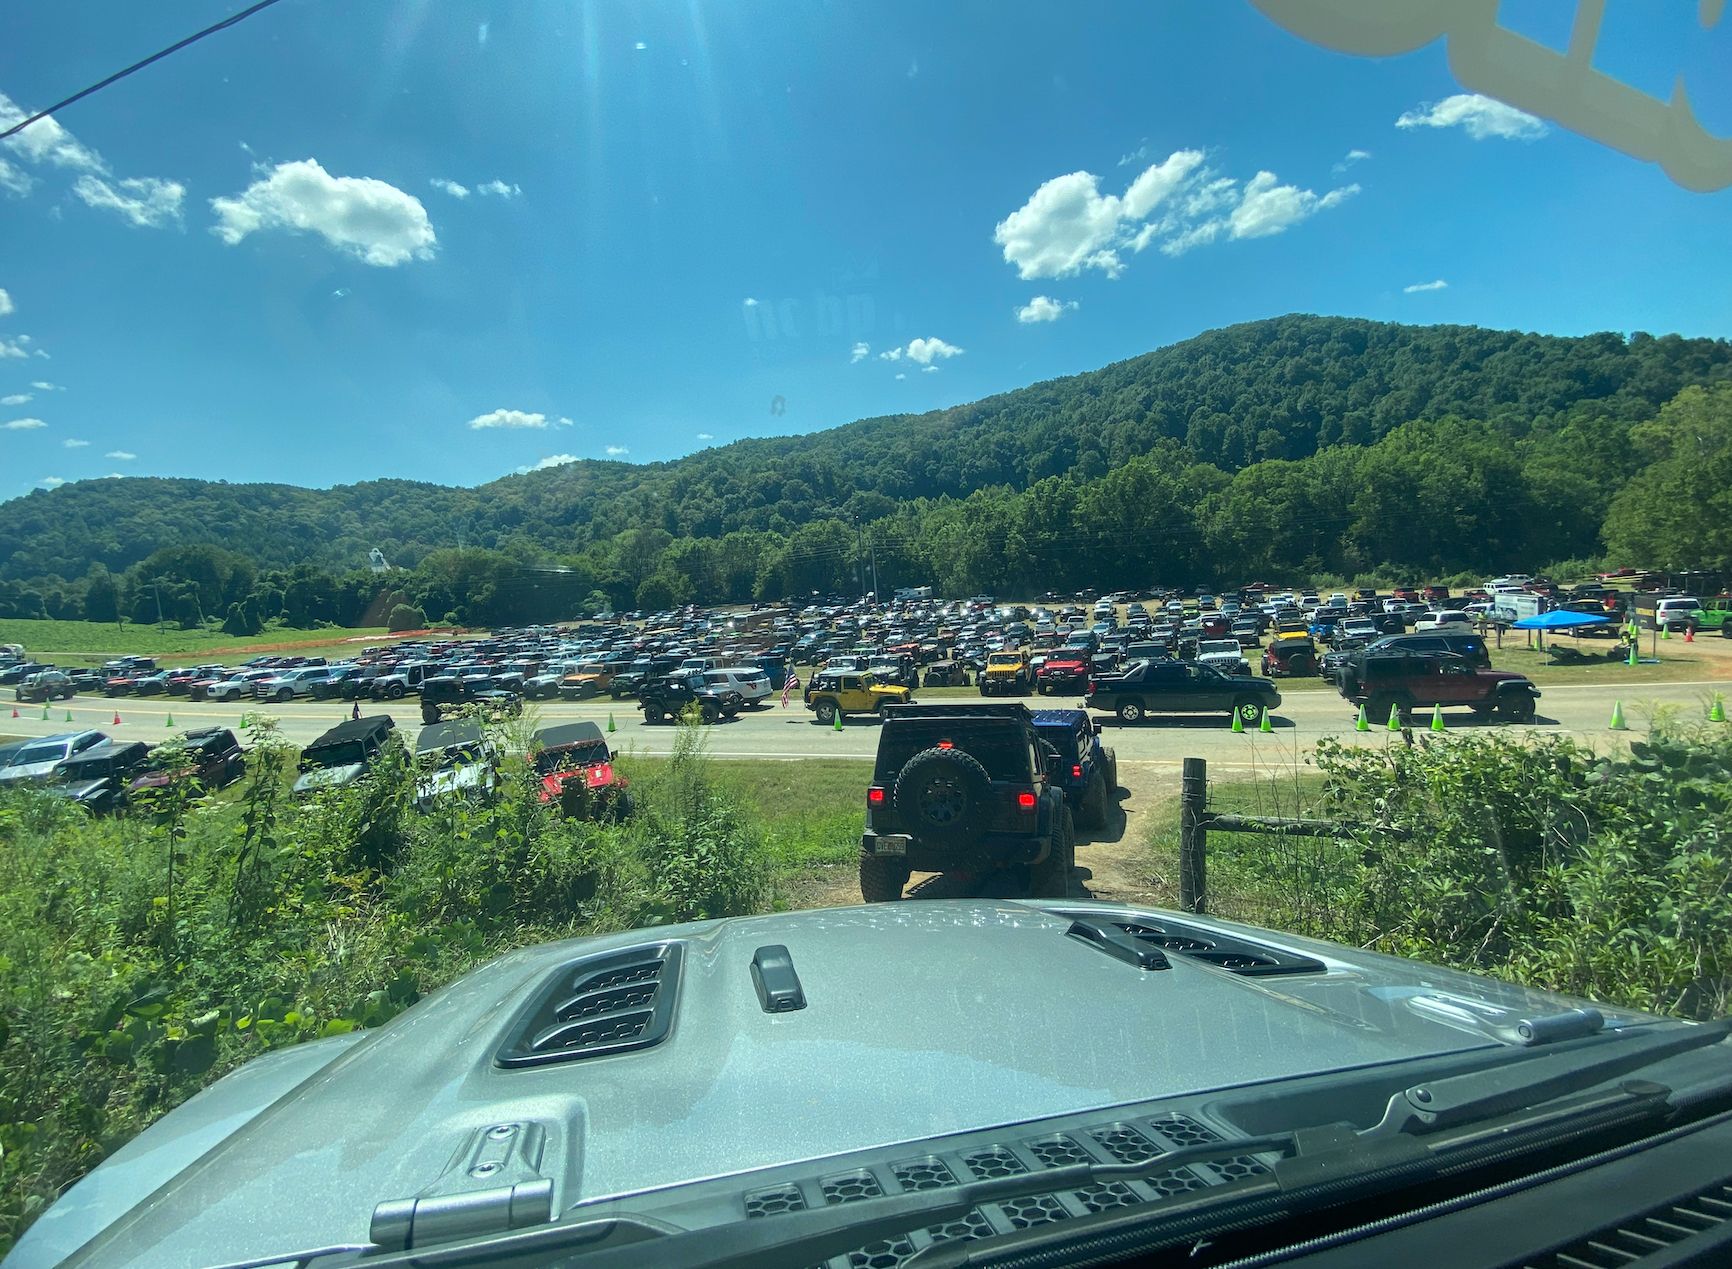 2021 Sheriff's Jeep Fest